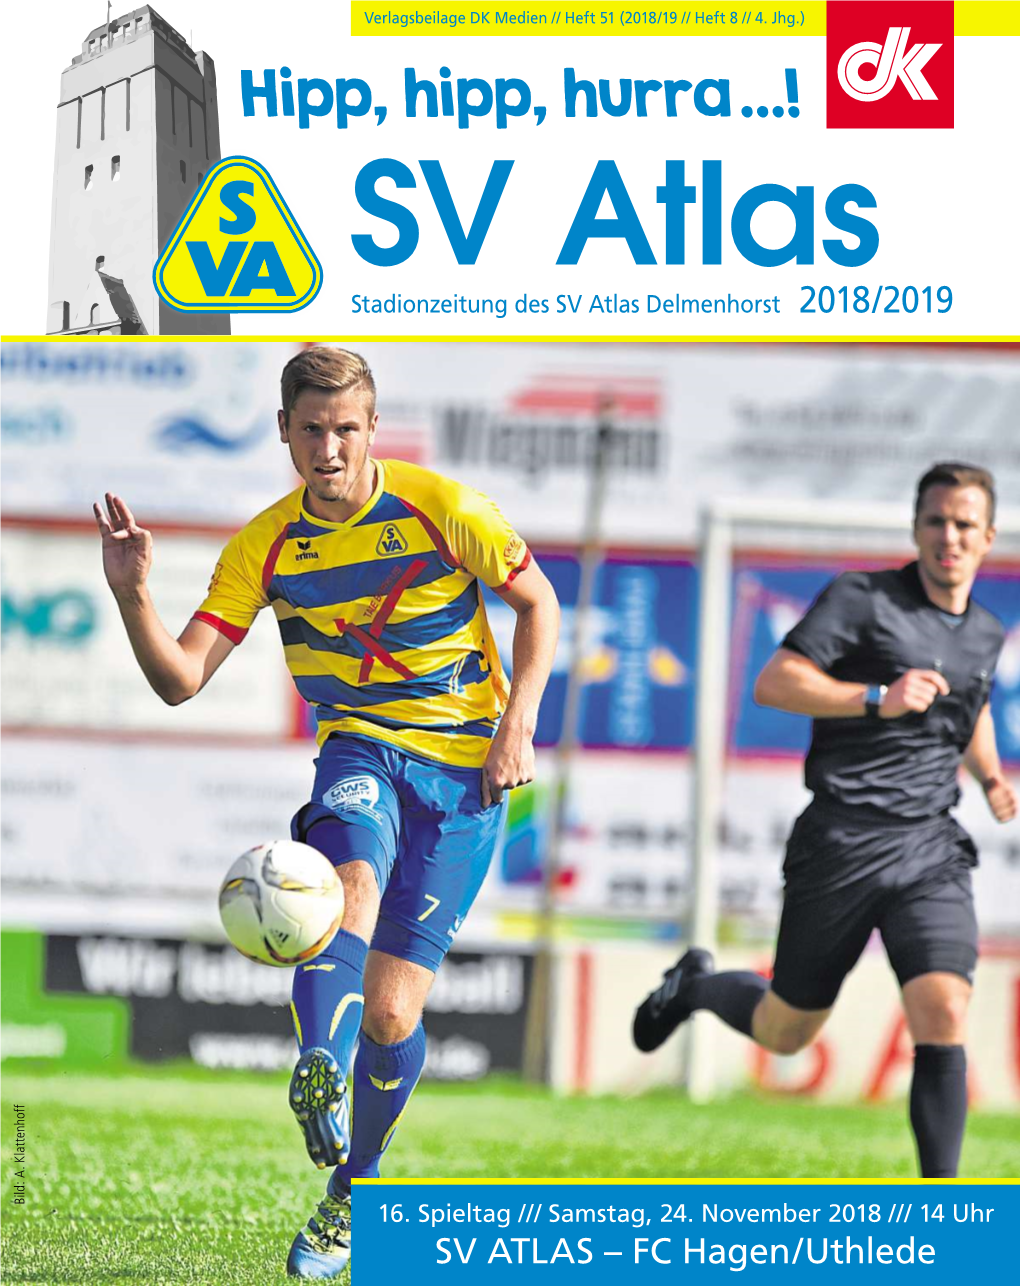 SV Atlas Stadionzeitung Des SV Atlas Delmenhorst 2018/2019 F of Nh Te at Kl A